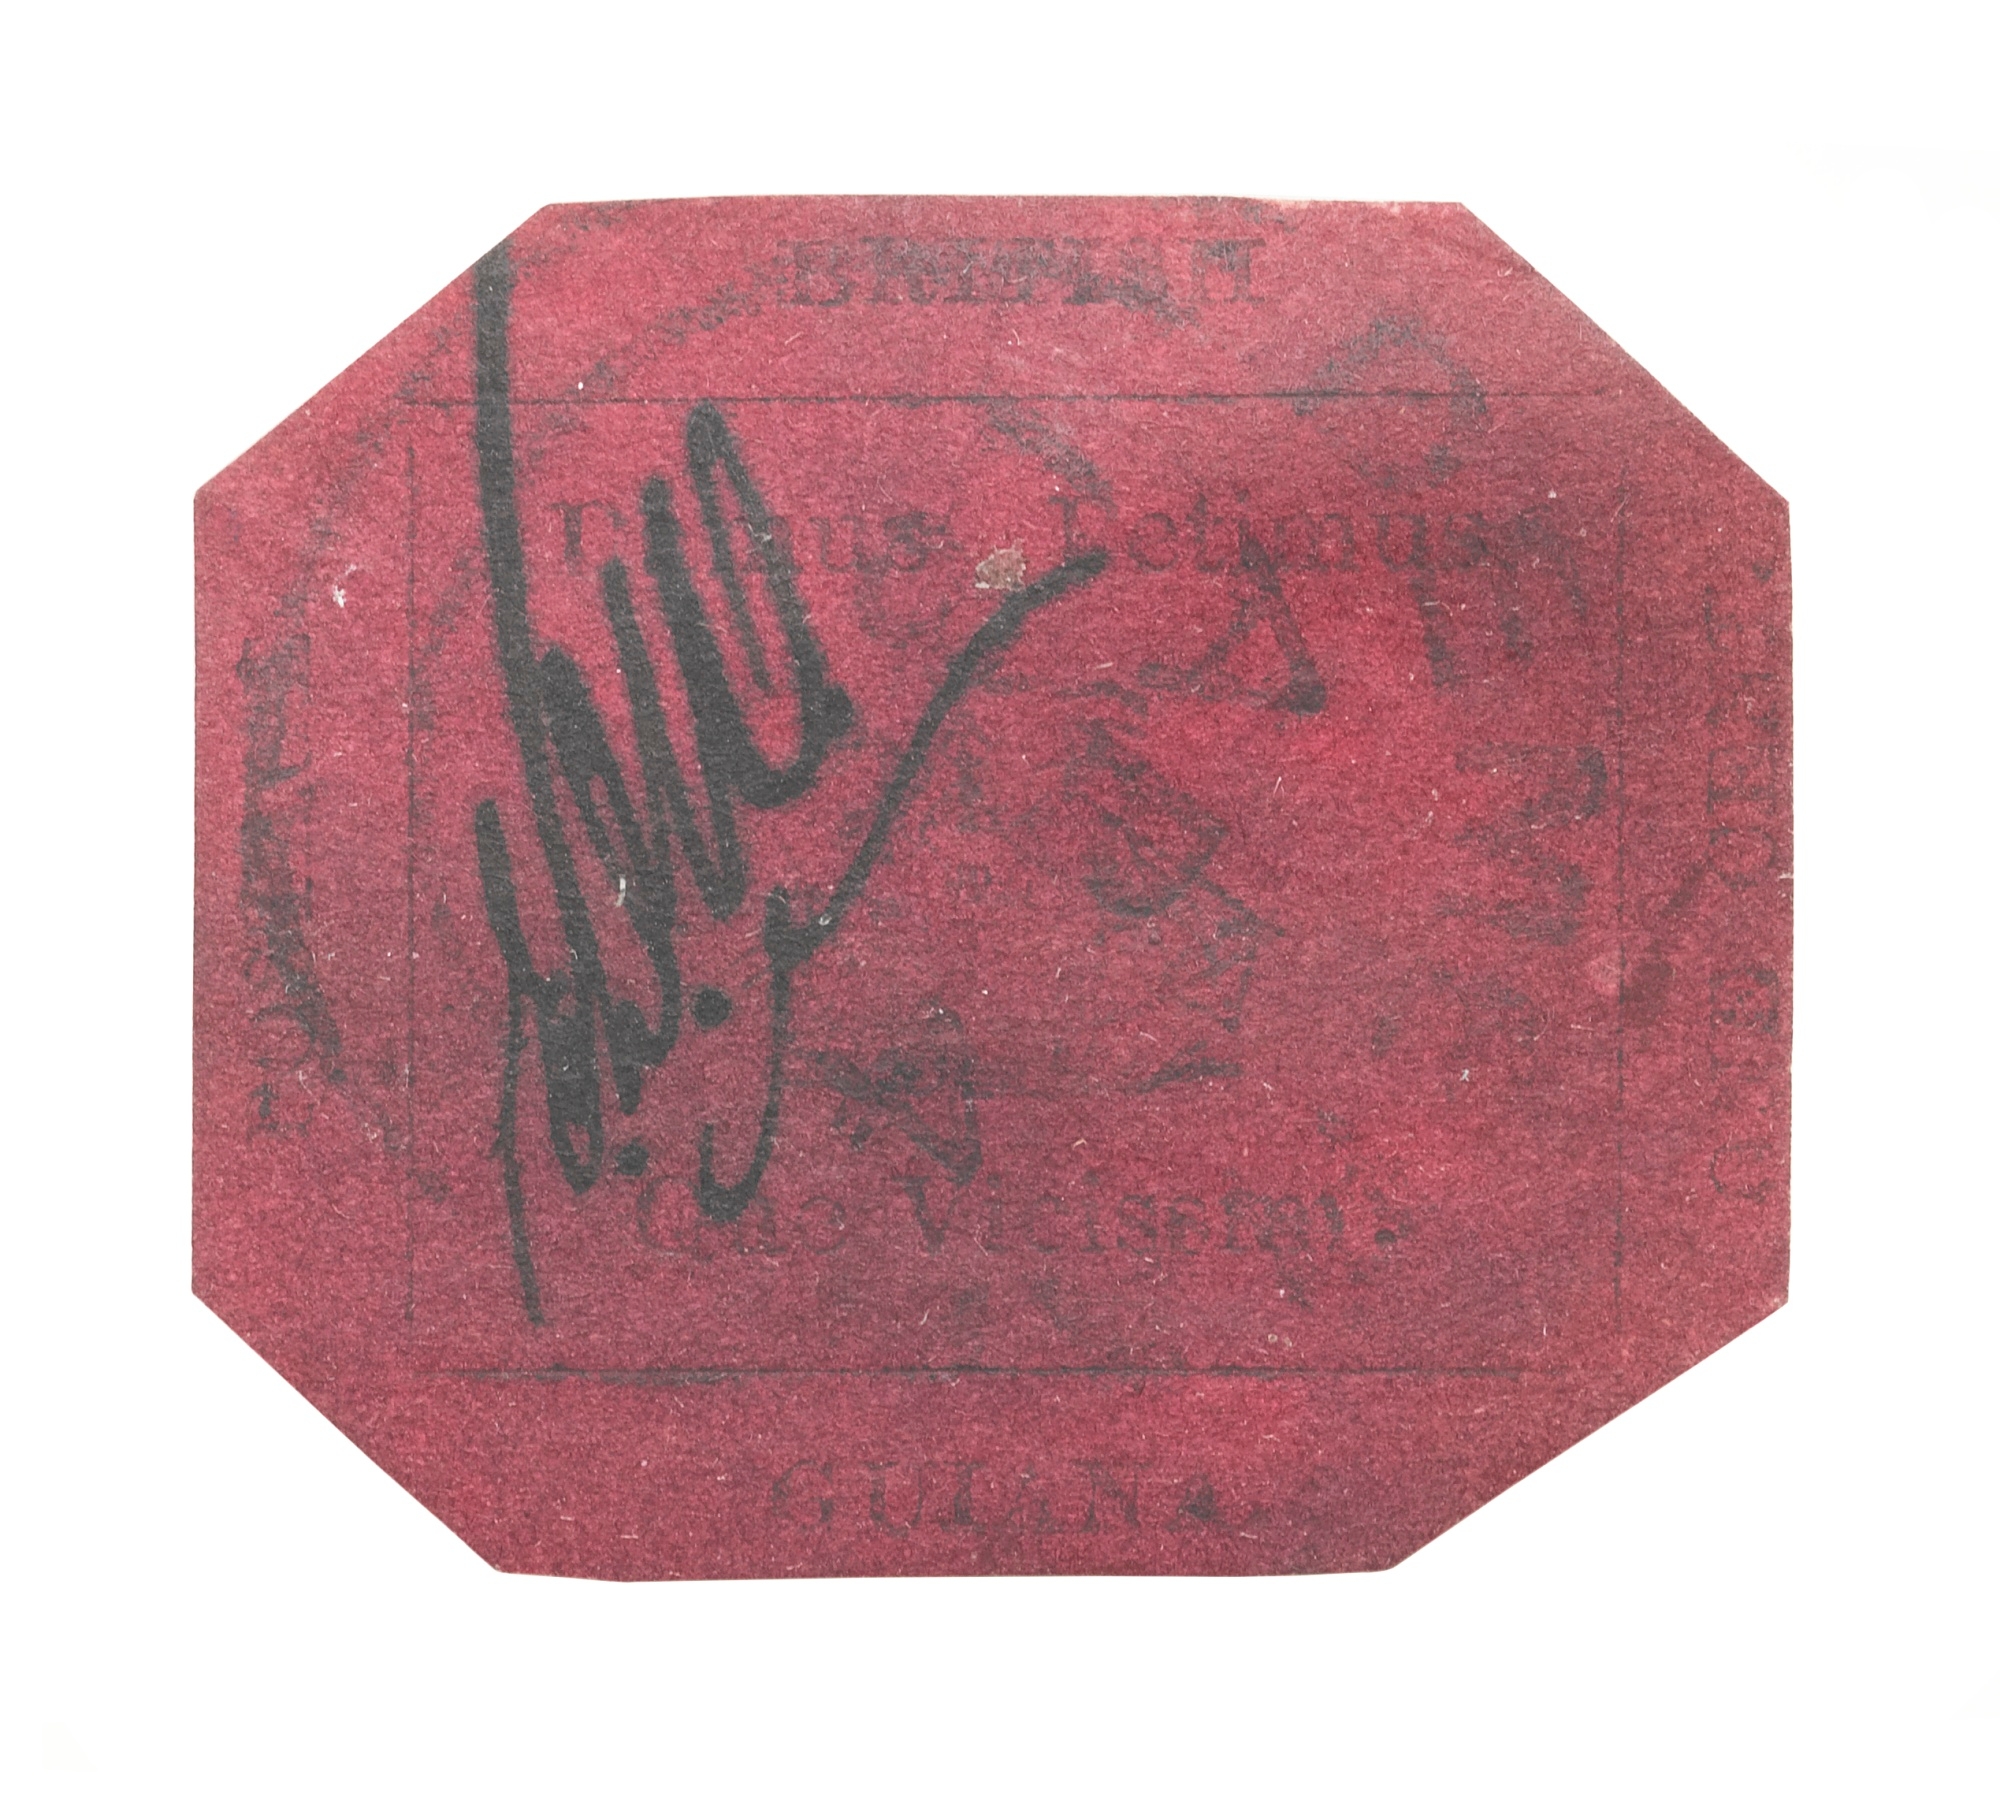 british guiana 13 - Rare stamp sets new world record at New York auction